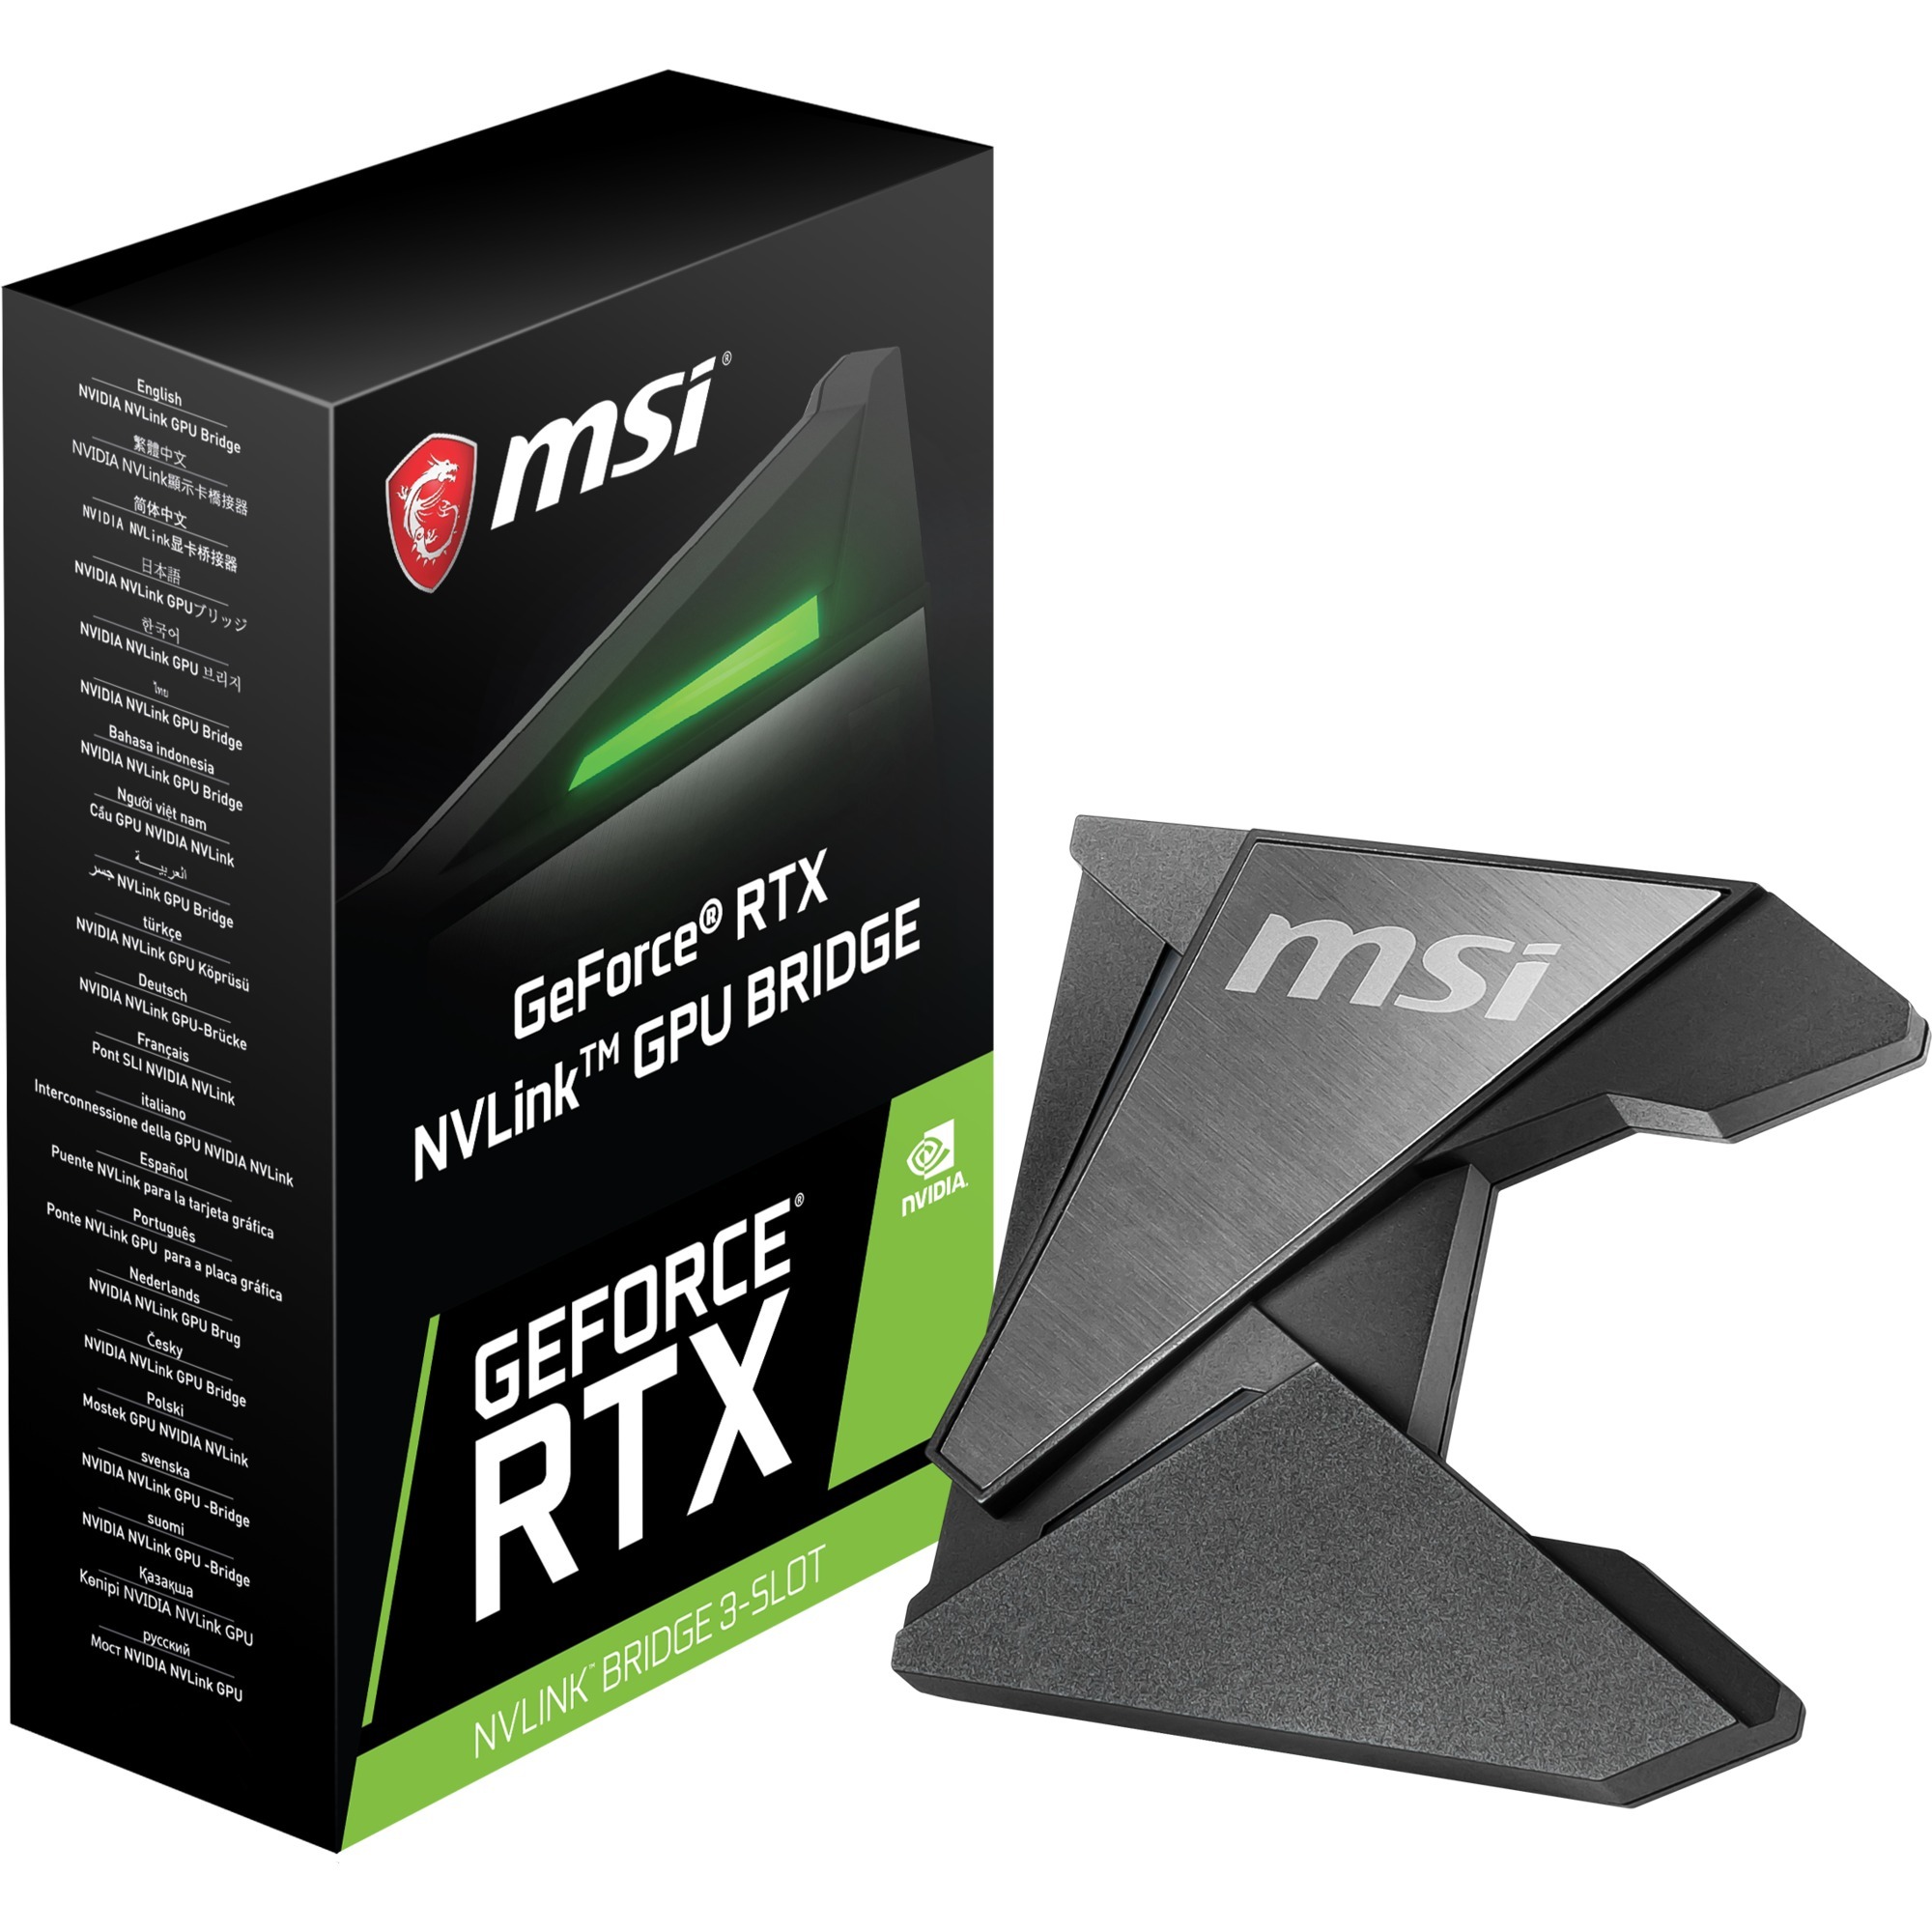 GeForce RTX NVLink GPU BRIDGE 3-SLOT, SLI bridge